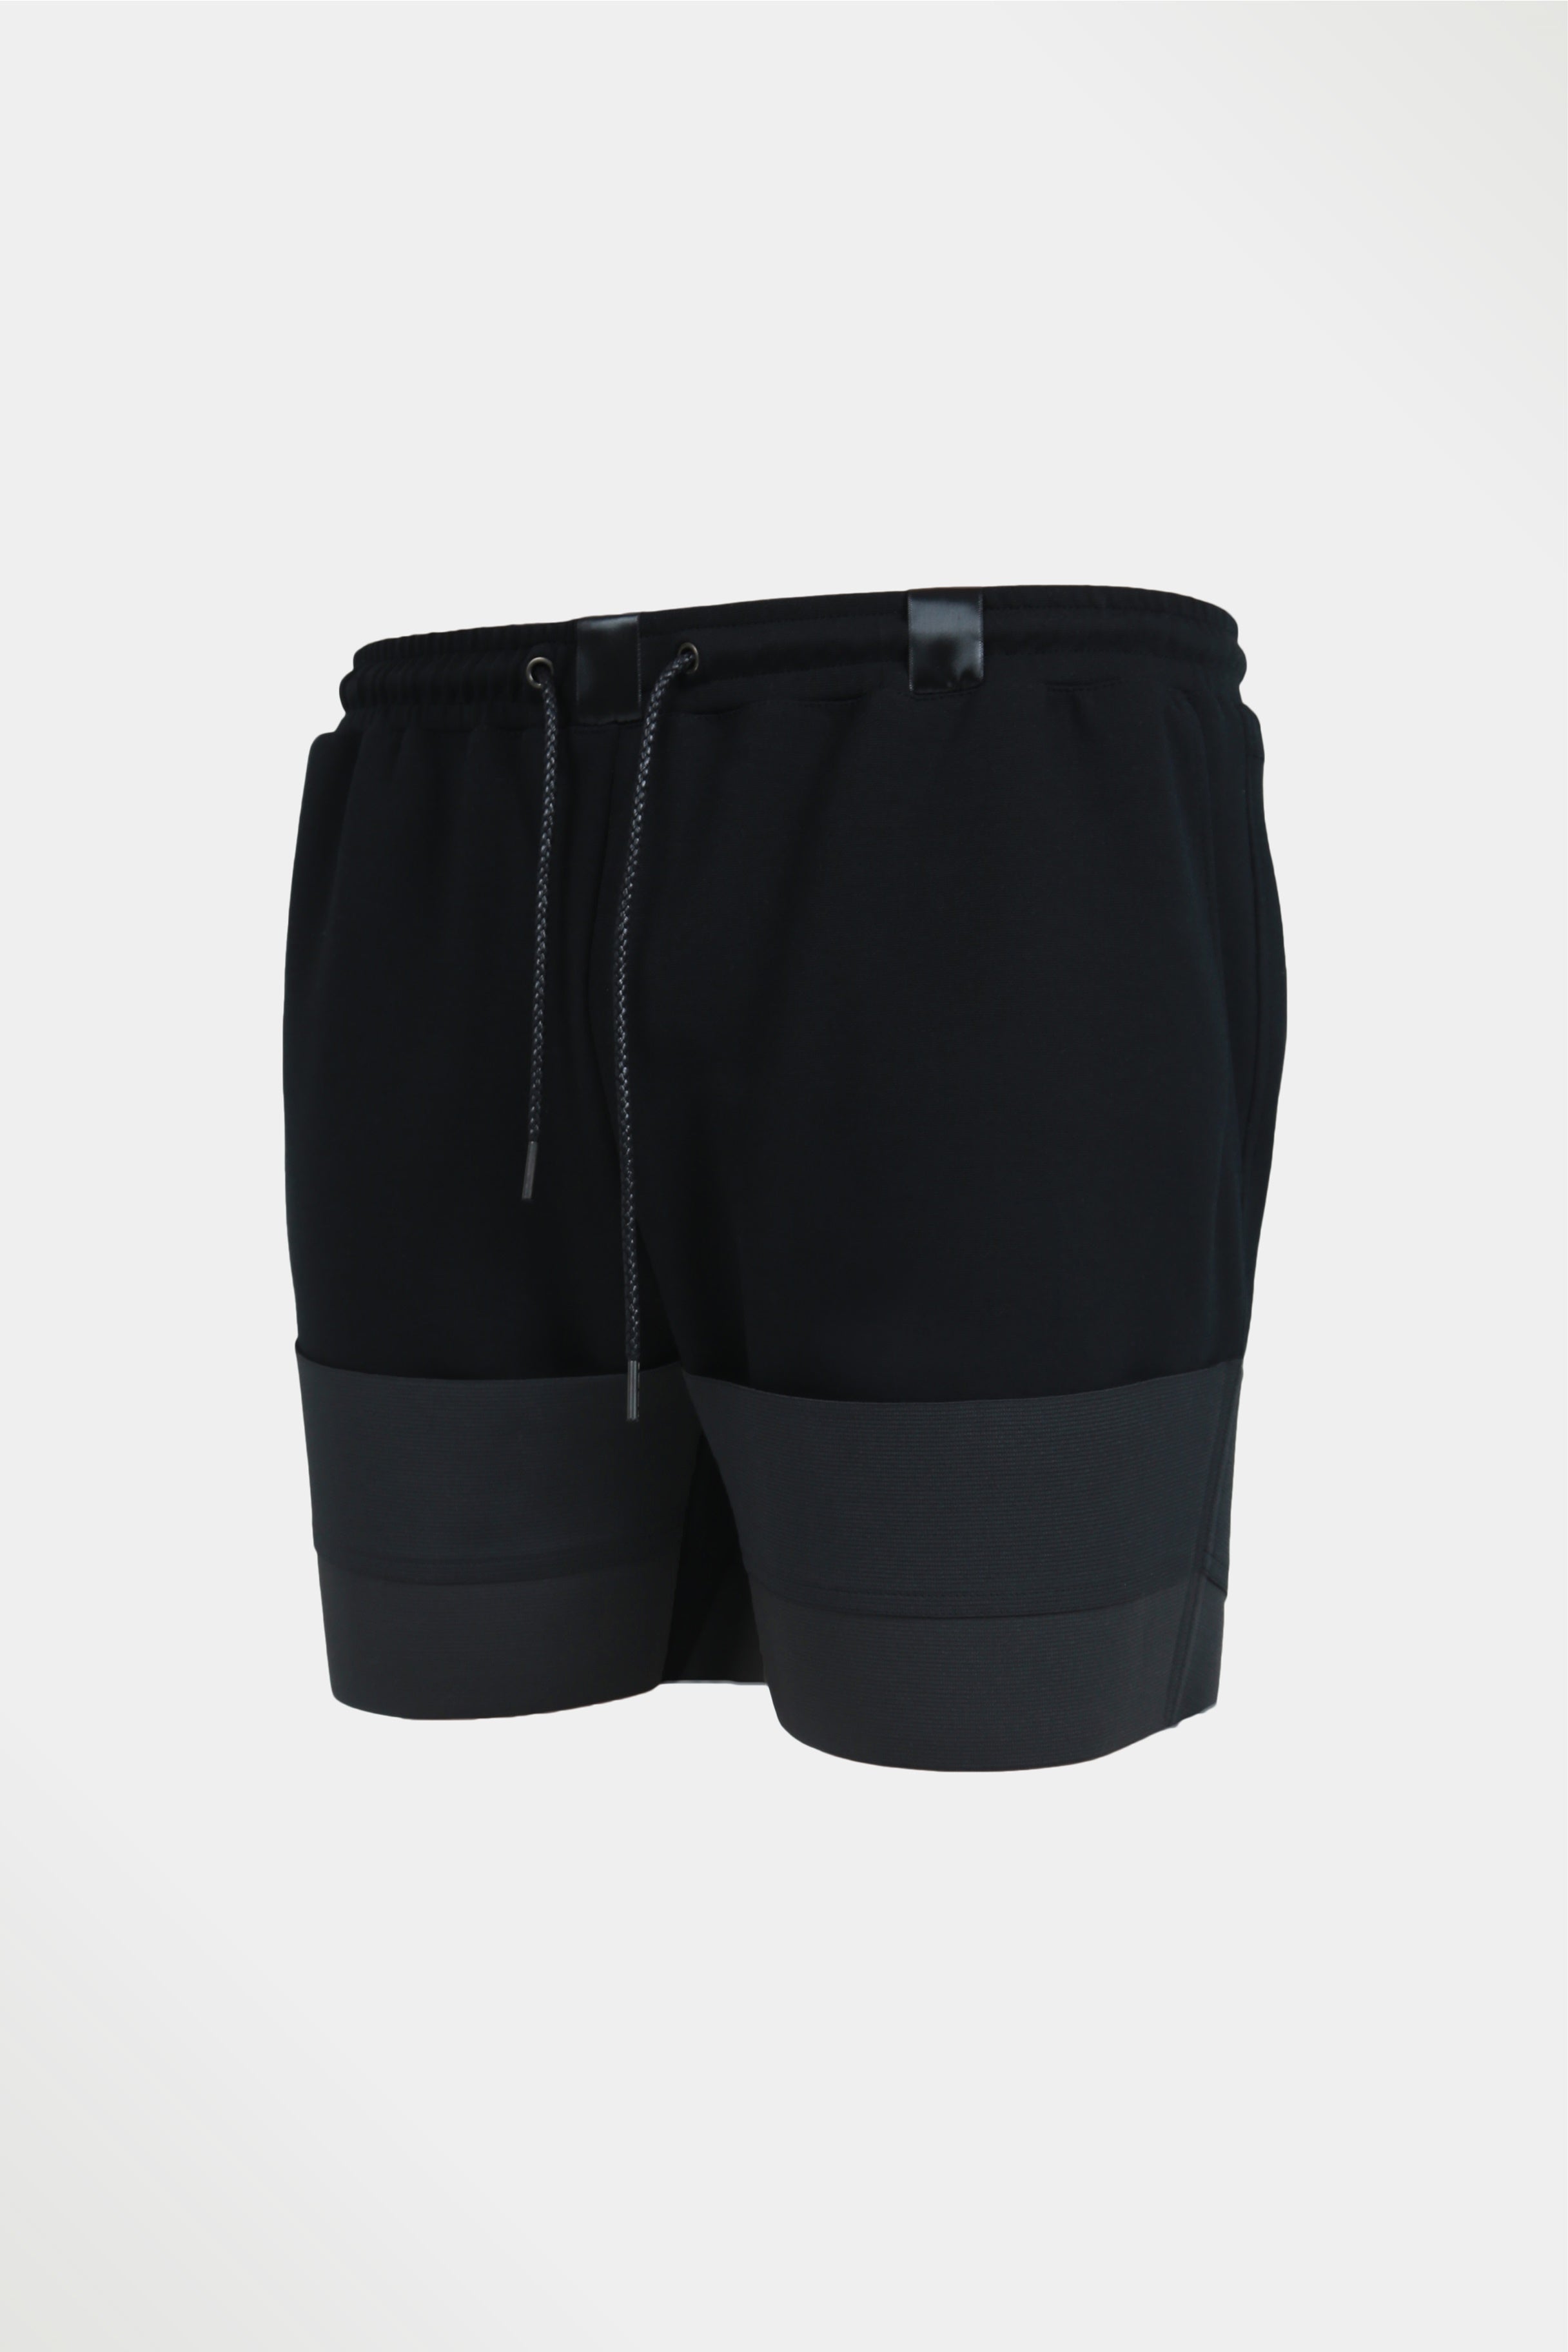 shorts double-band "pupil black"